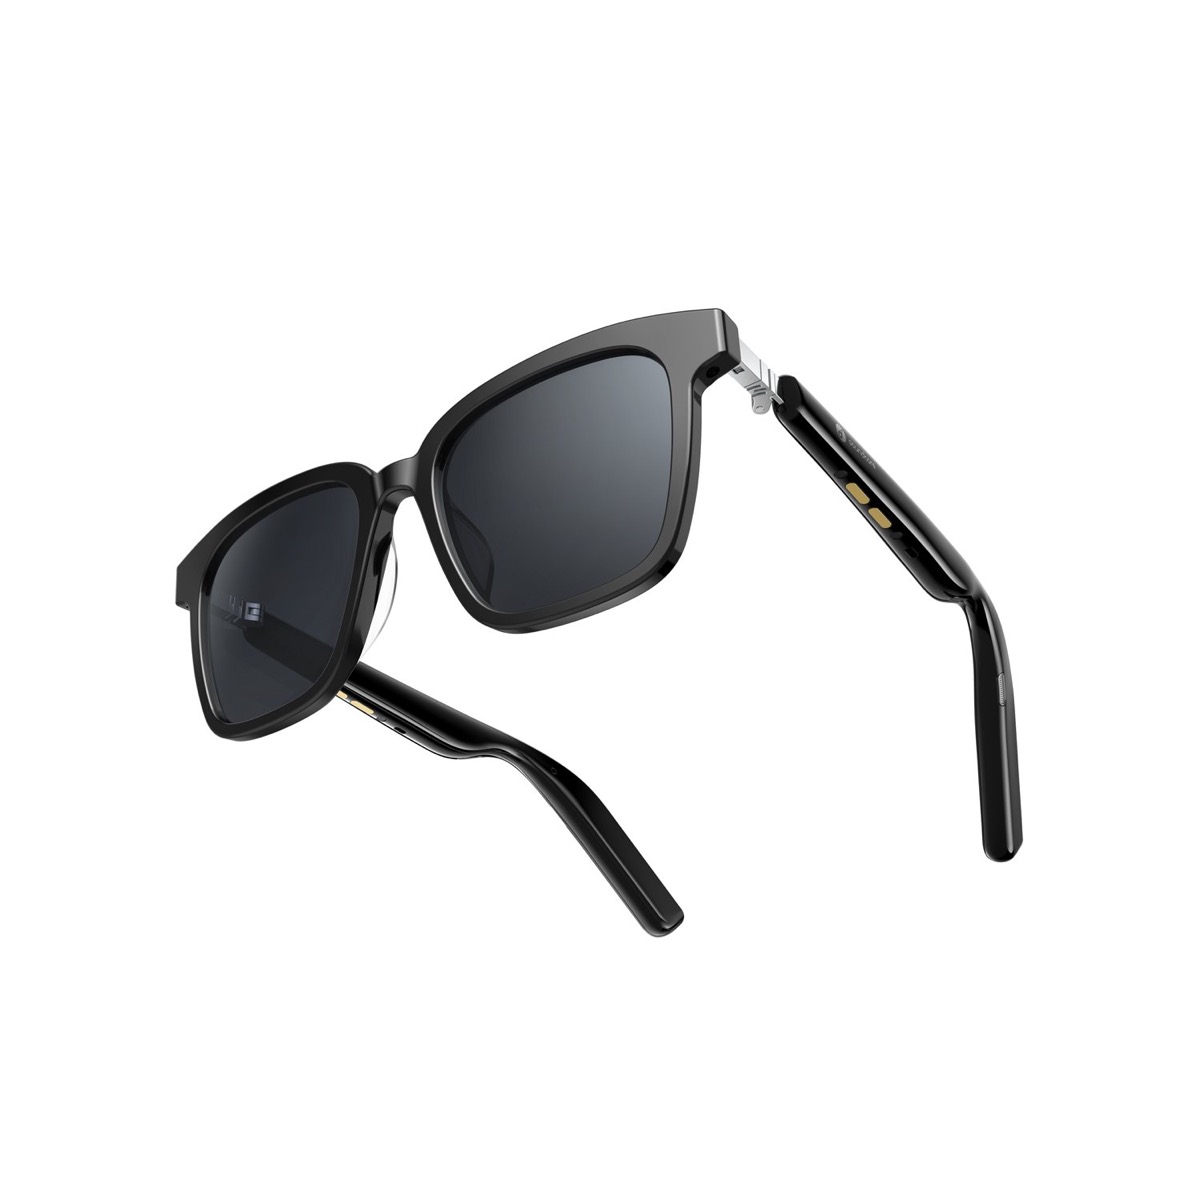 A pair of Soundcore Frames headphone sunglasses